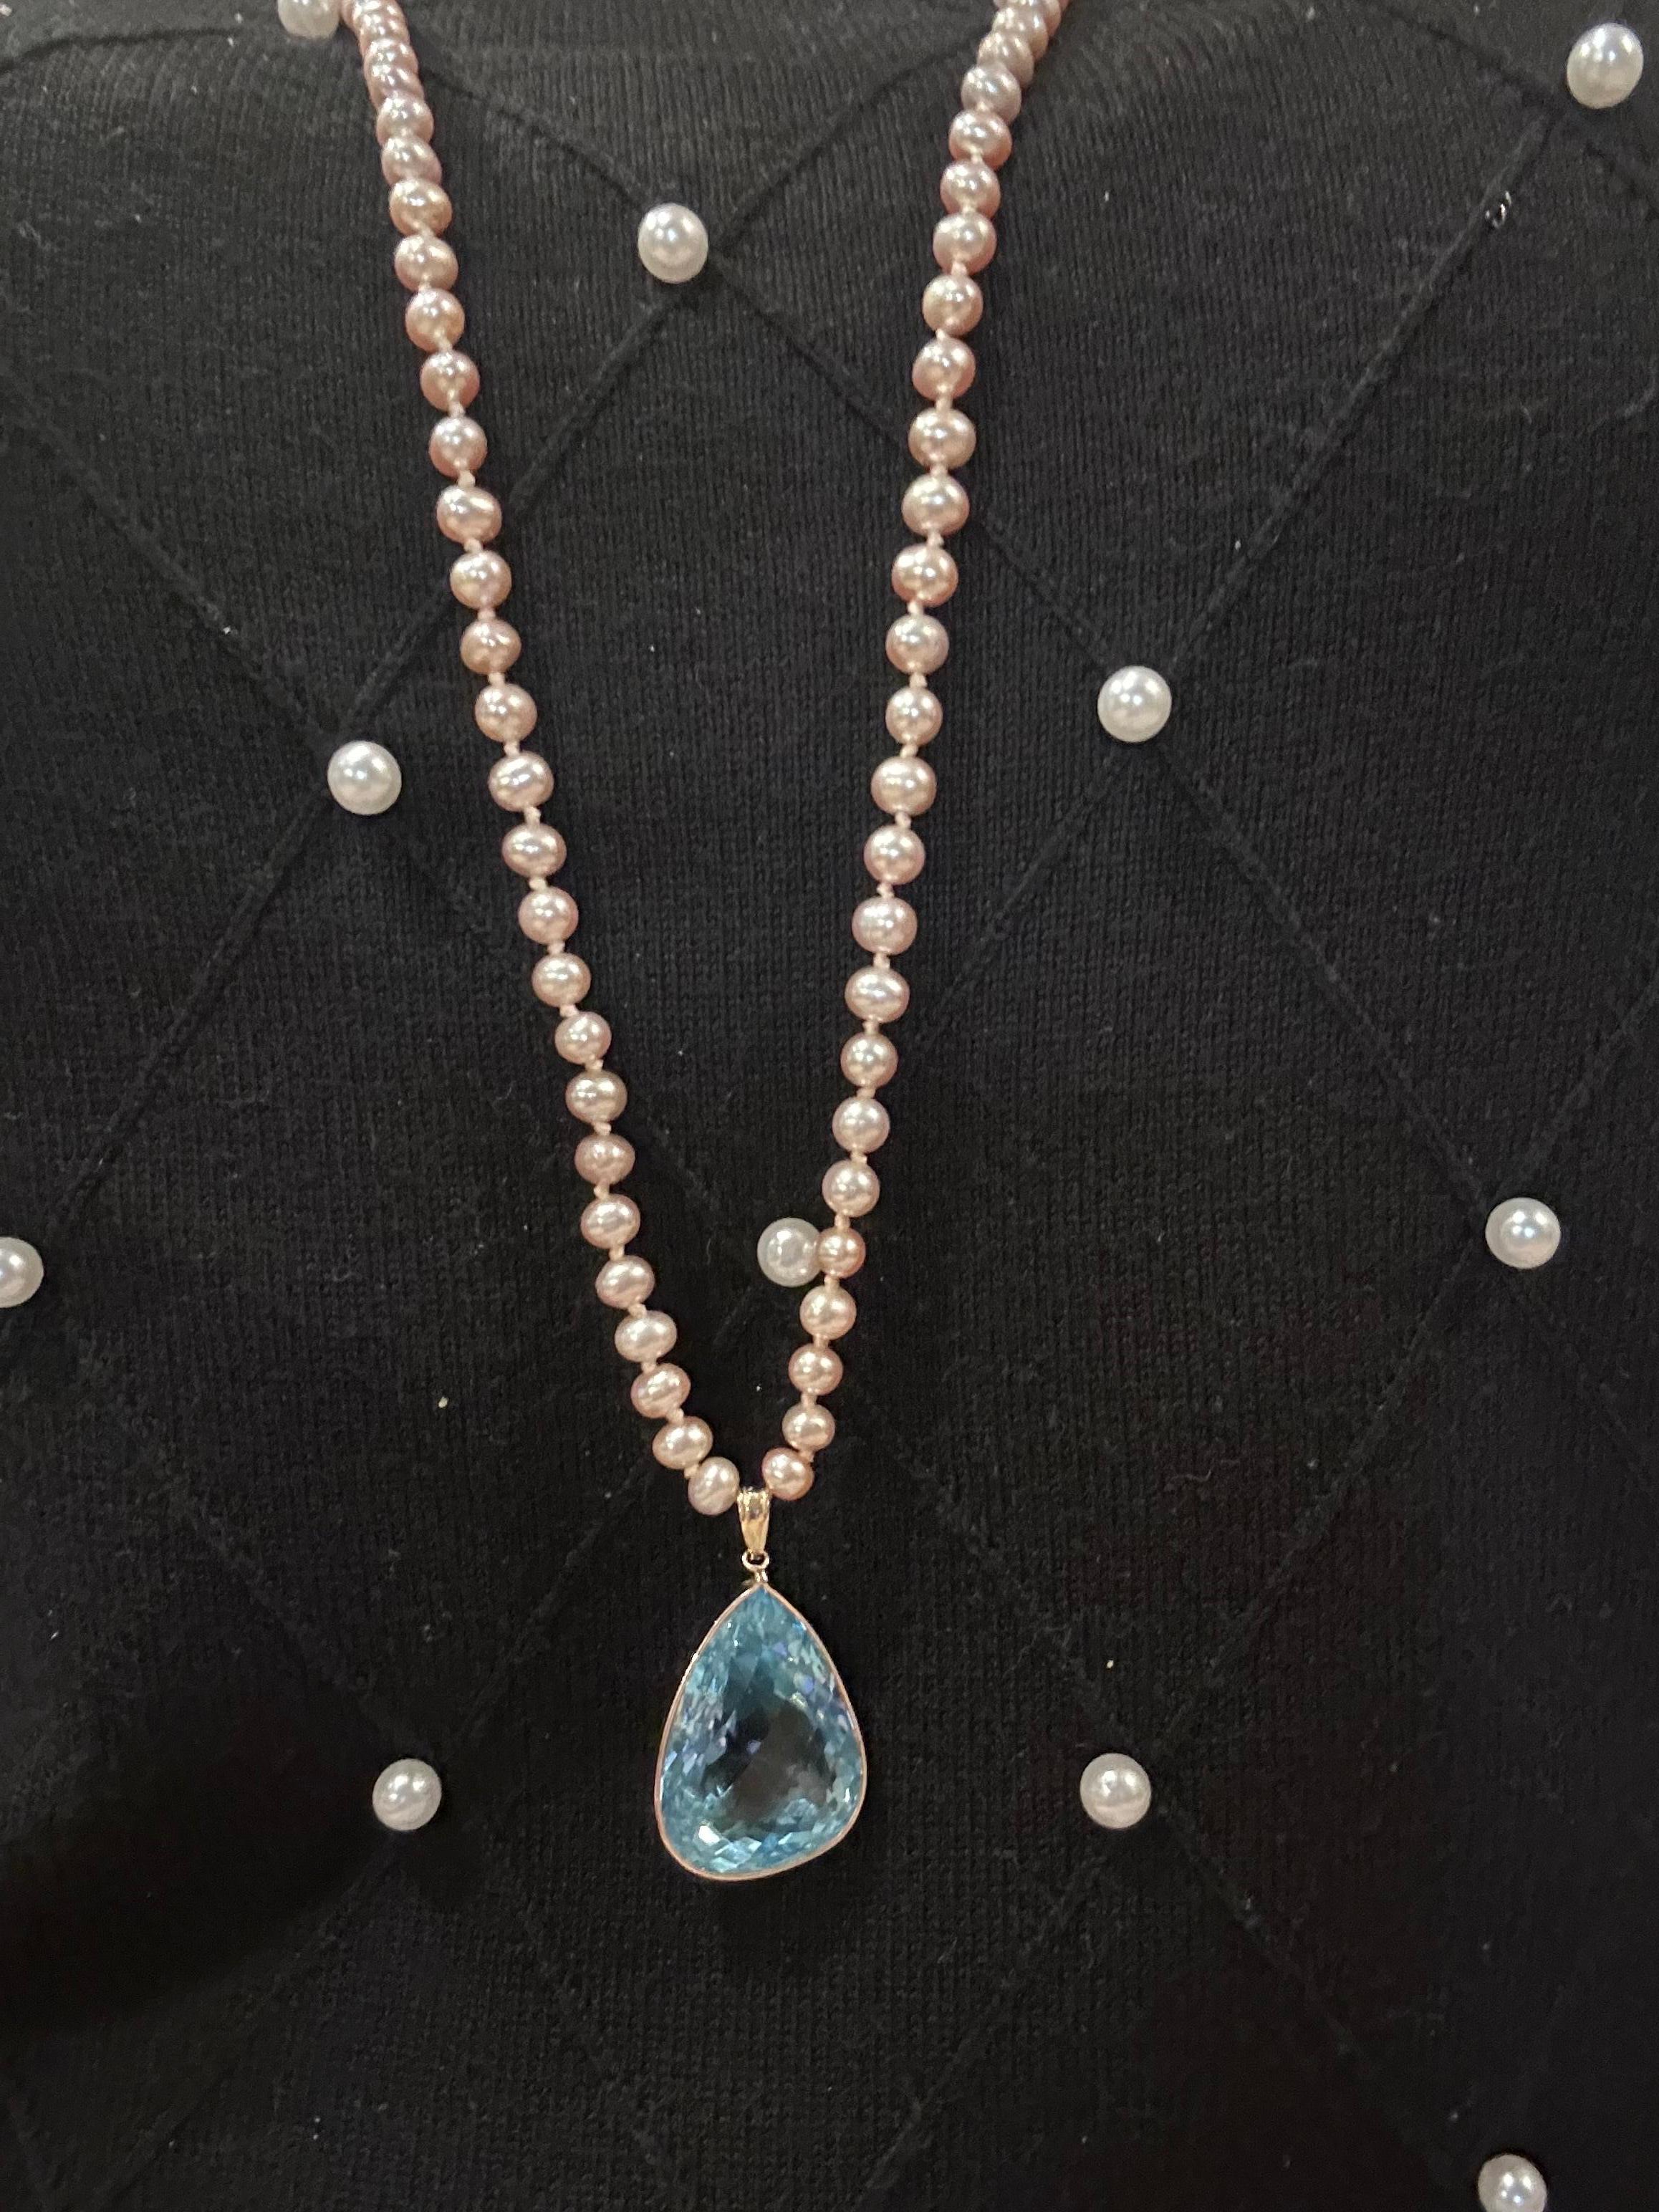 Exquisite Topaz necklace 14 Karat Gold pearl necklace 30ct HUGE pear topaz 30